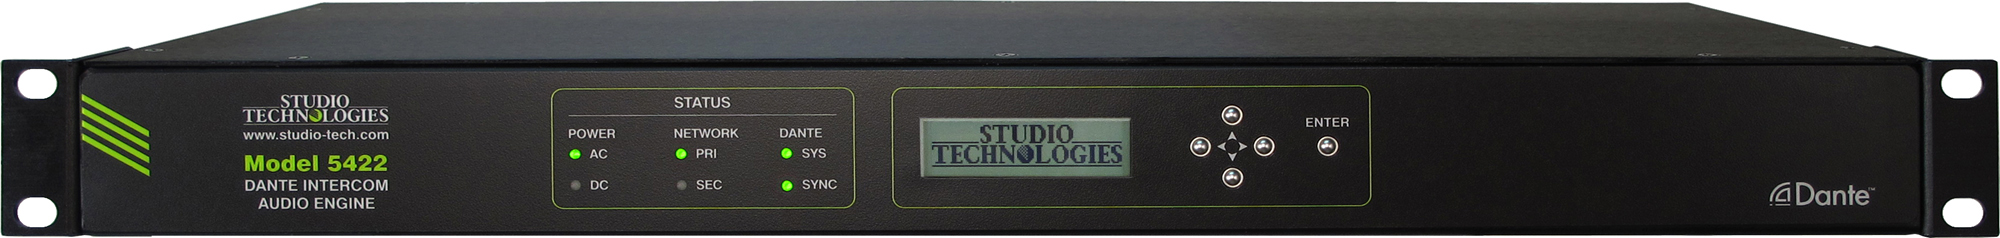 Studio Technologies Model 5422